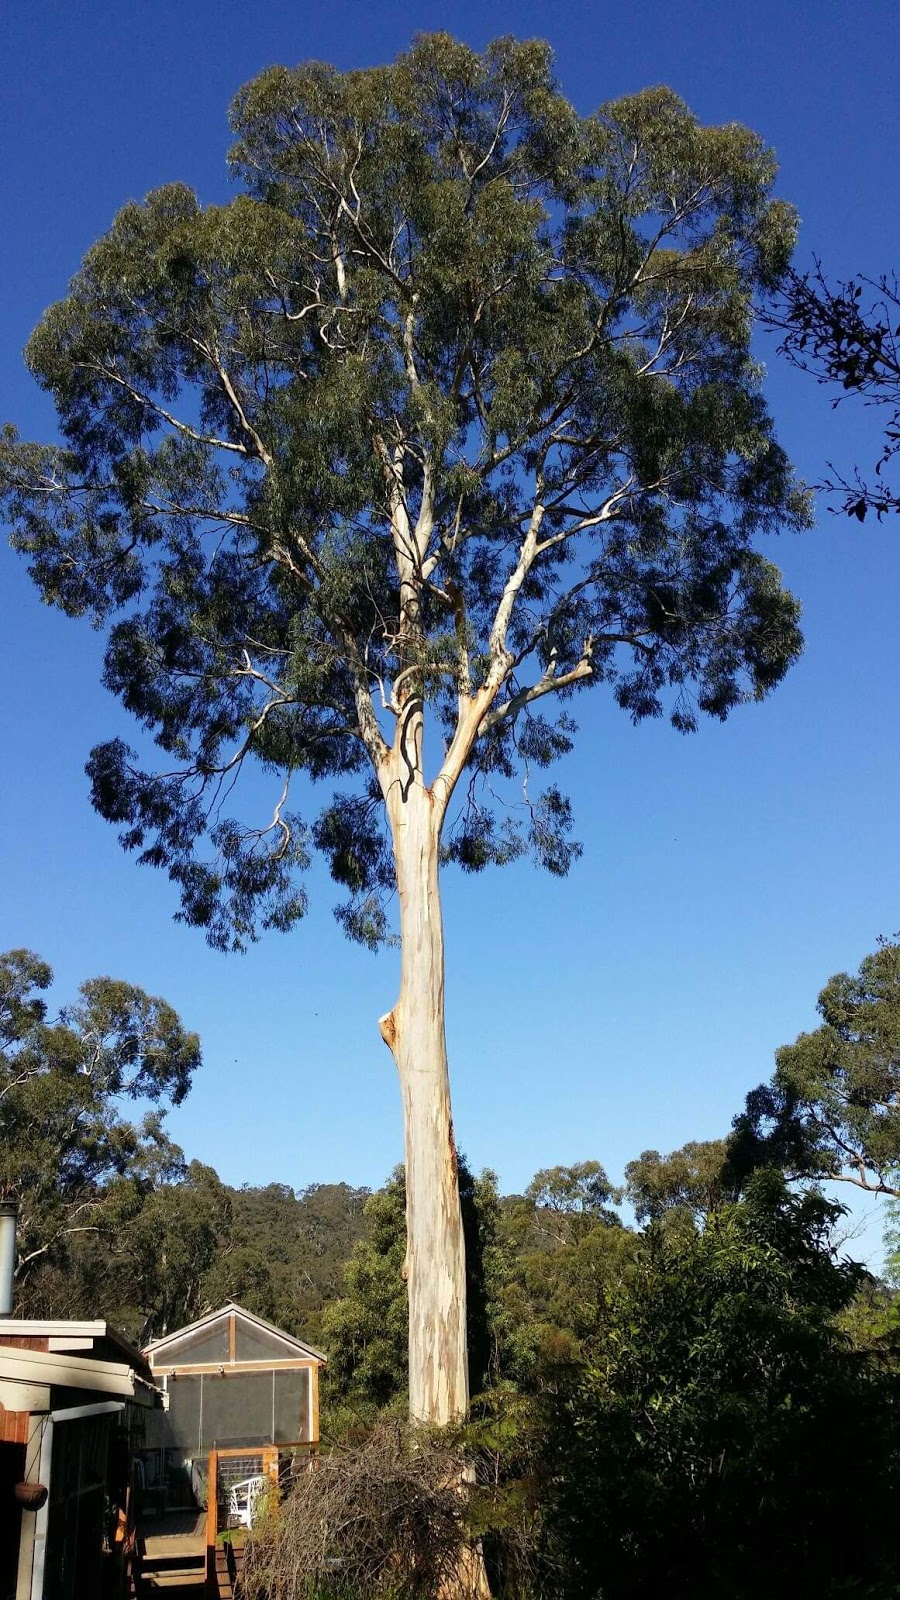 Tree Range Arborists Pty Ltd |  | 29 Lisheen Rd, Cockatoo VIC 3781, Australia | 1800870468 OR +61 1800 870 468